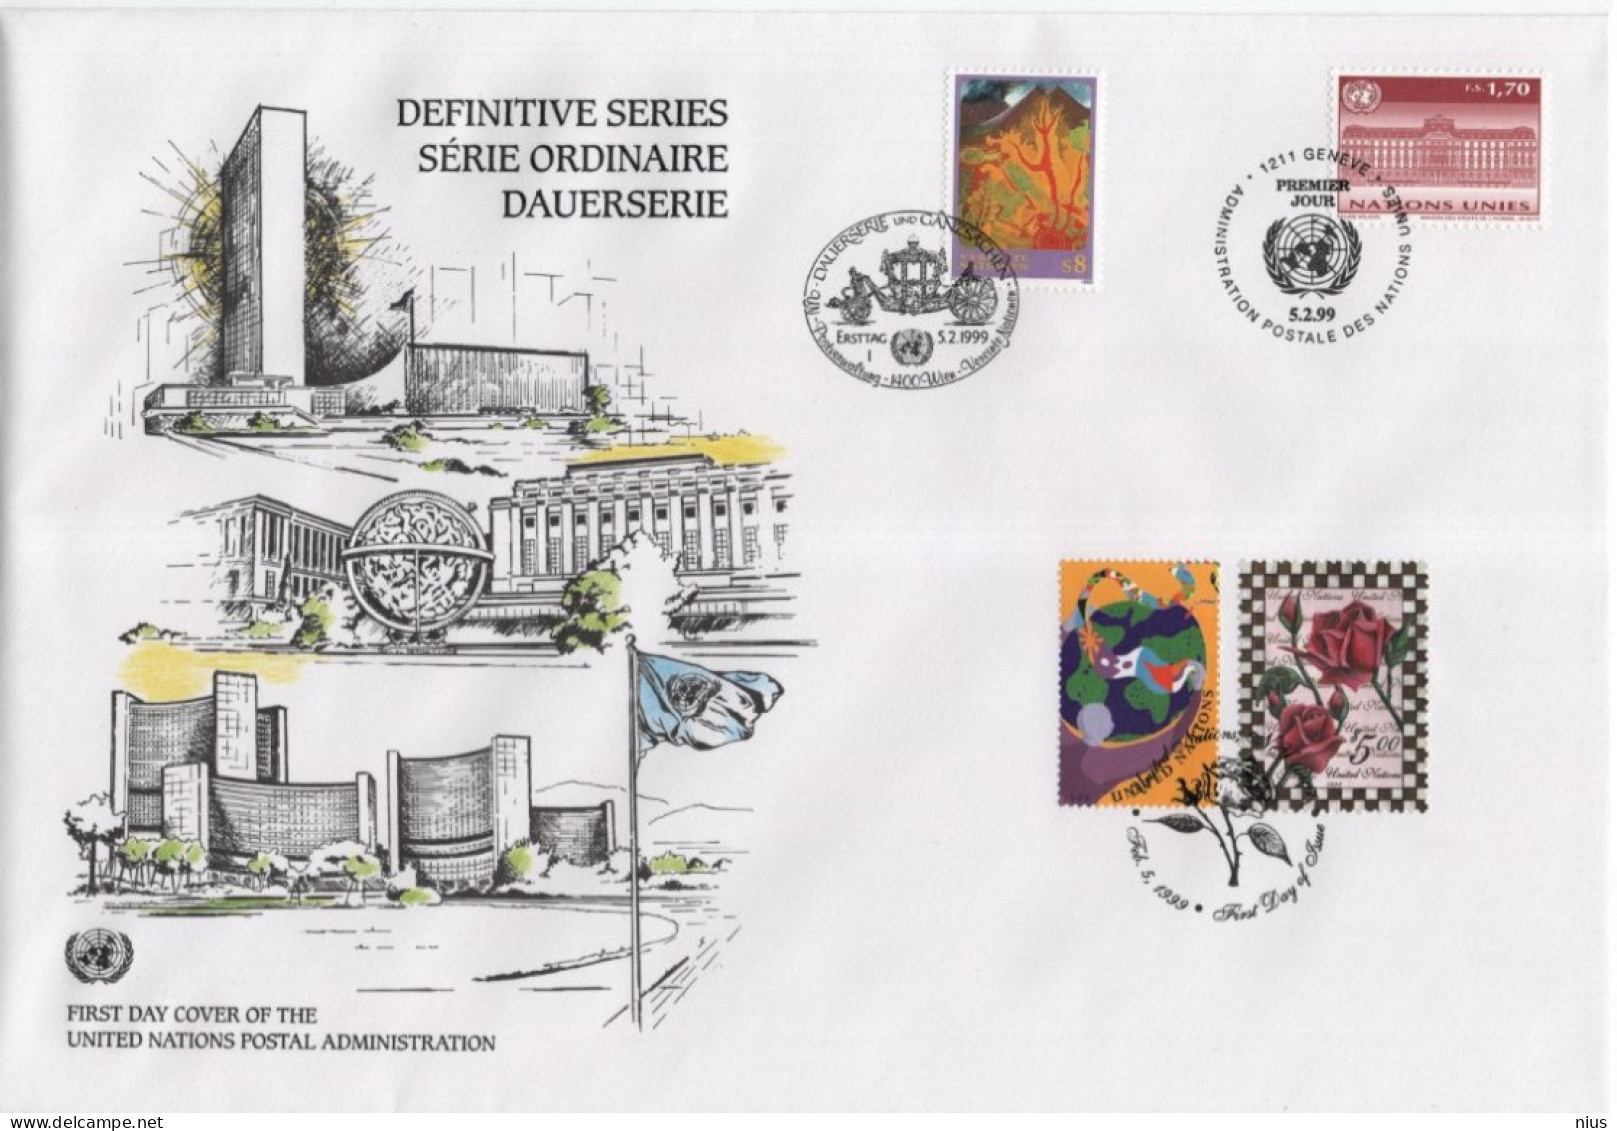 Vereinte Nationen United Nations Unies UN 1999 FDC Definitive Series, Serie Ordinaire, Dauerserie - Altri - Europa